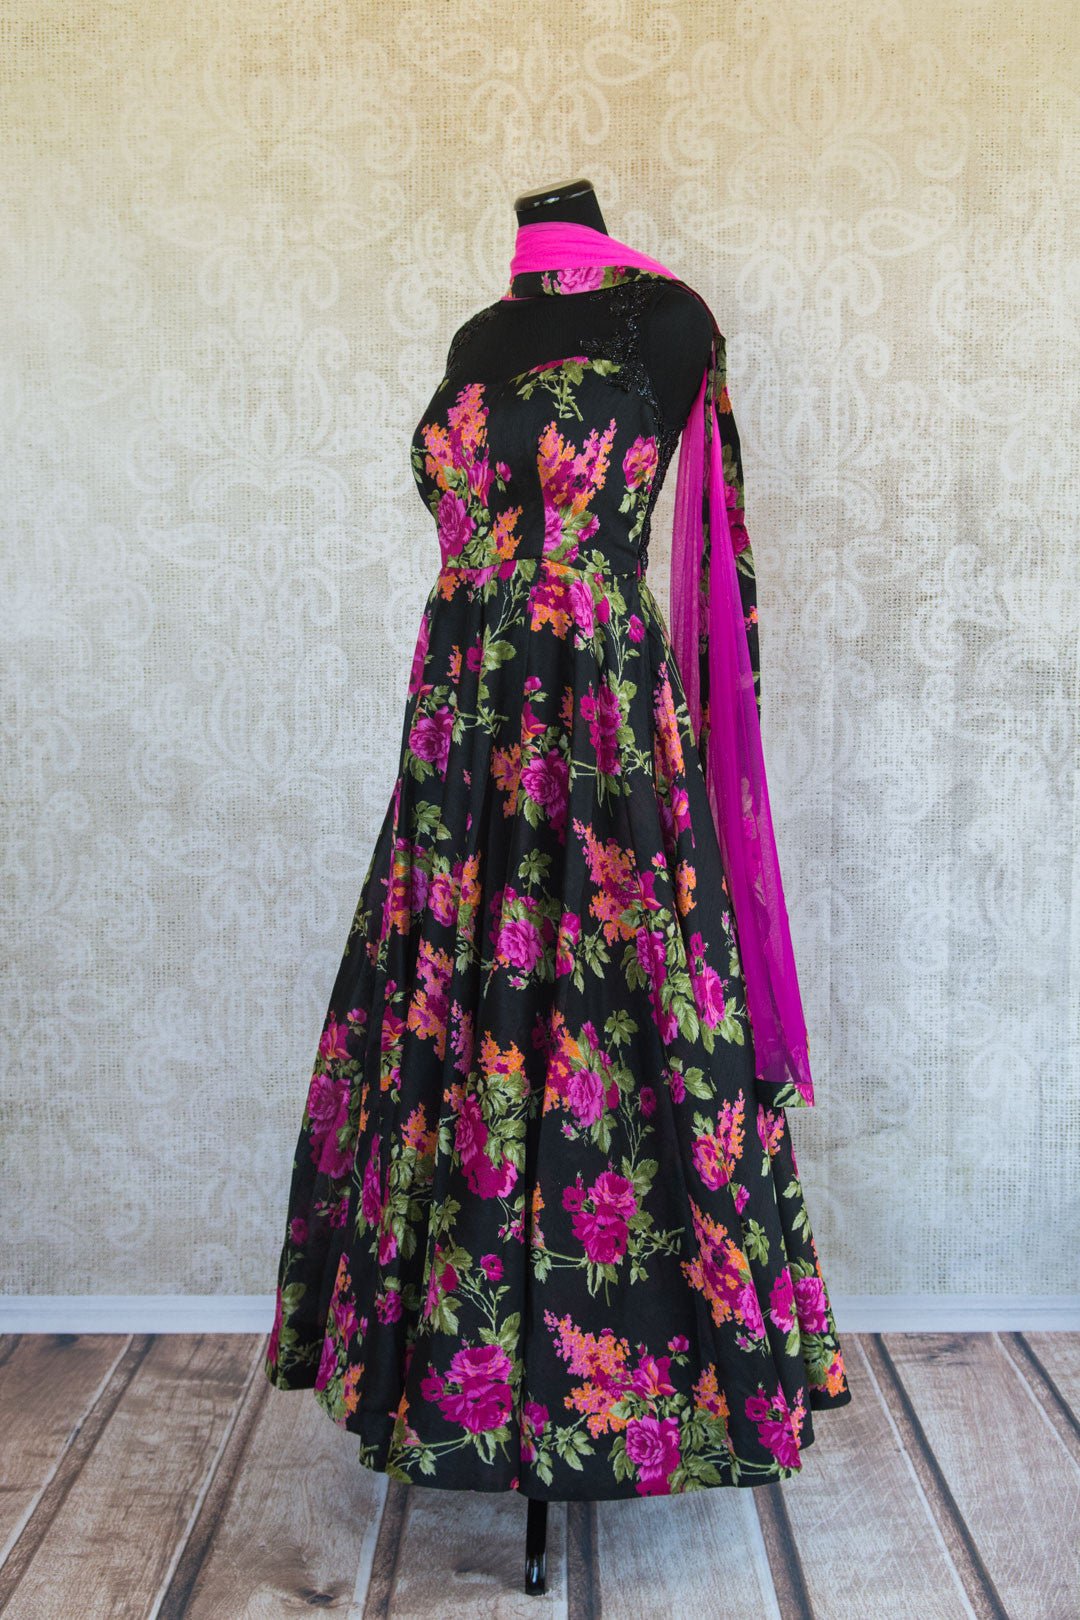 501092-magenta-coral-floral-print-black-suit-elegant-beadwork-soft-flowing-skirt-scarf-alternate-view-2